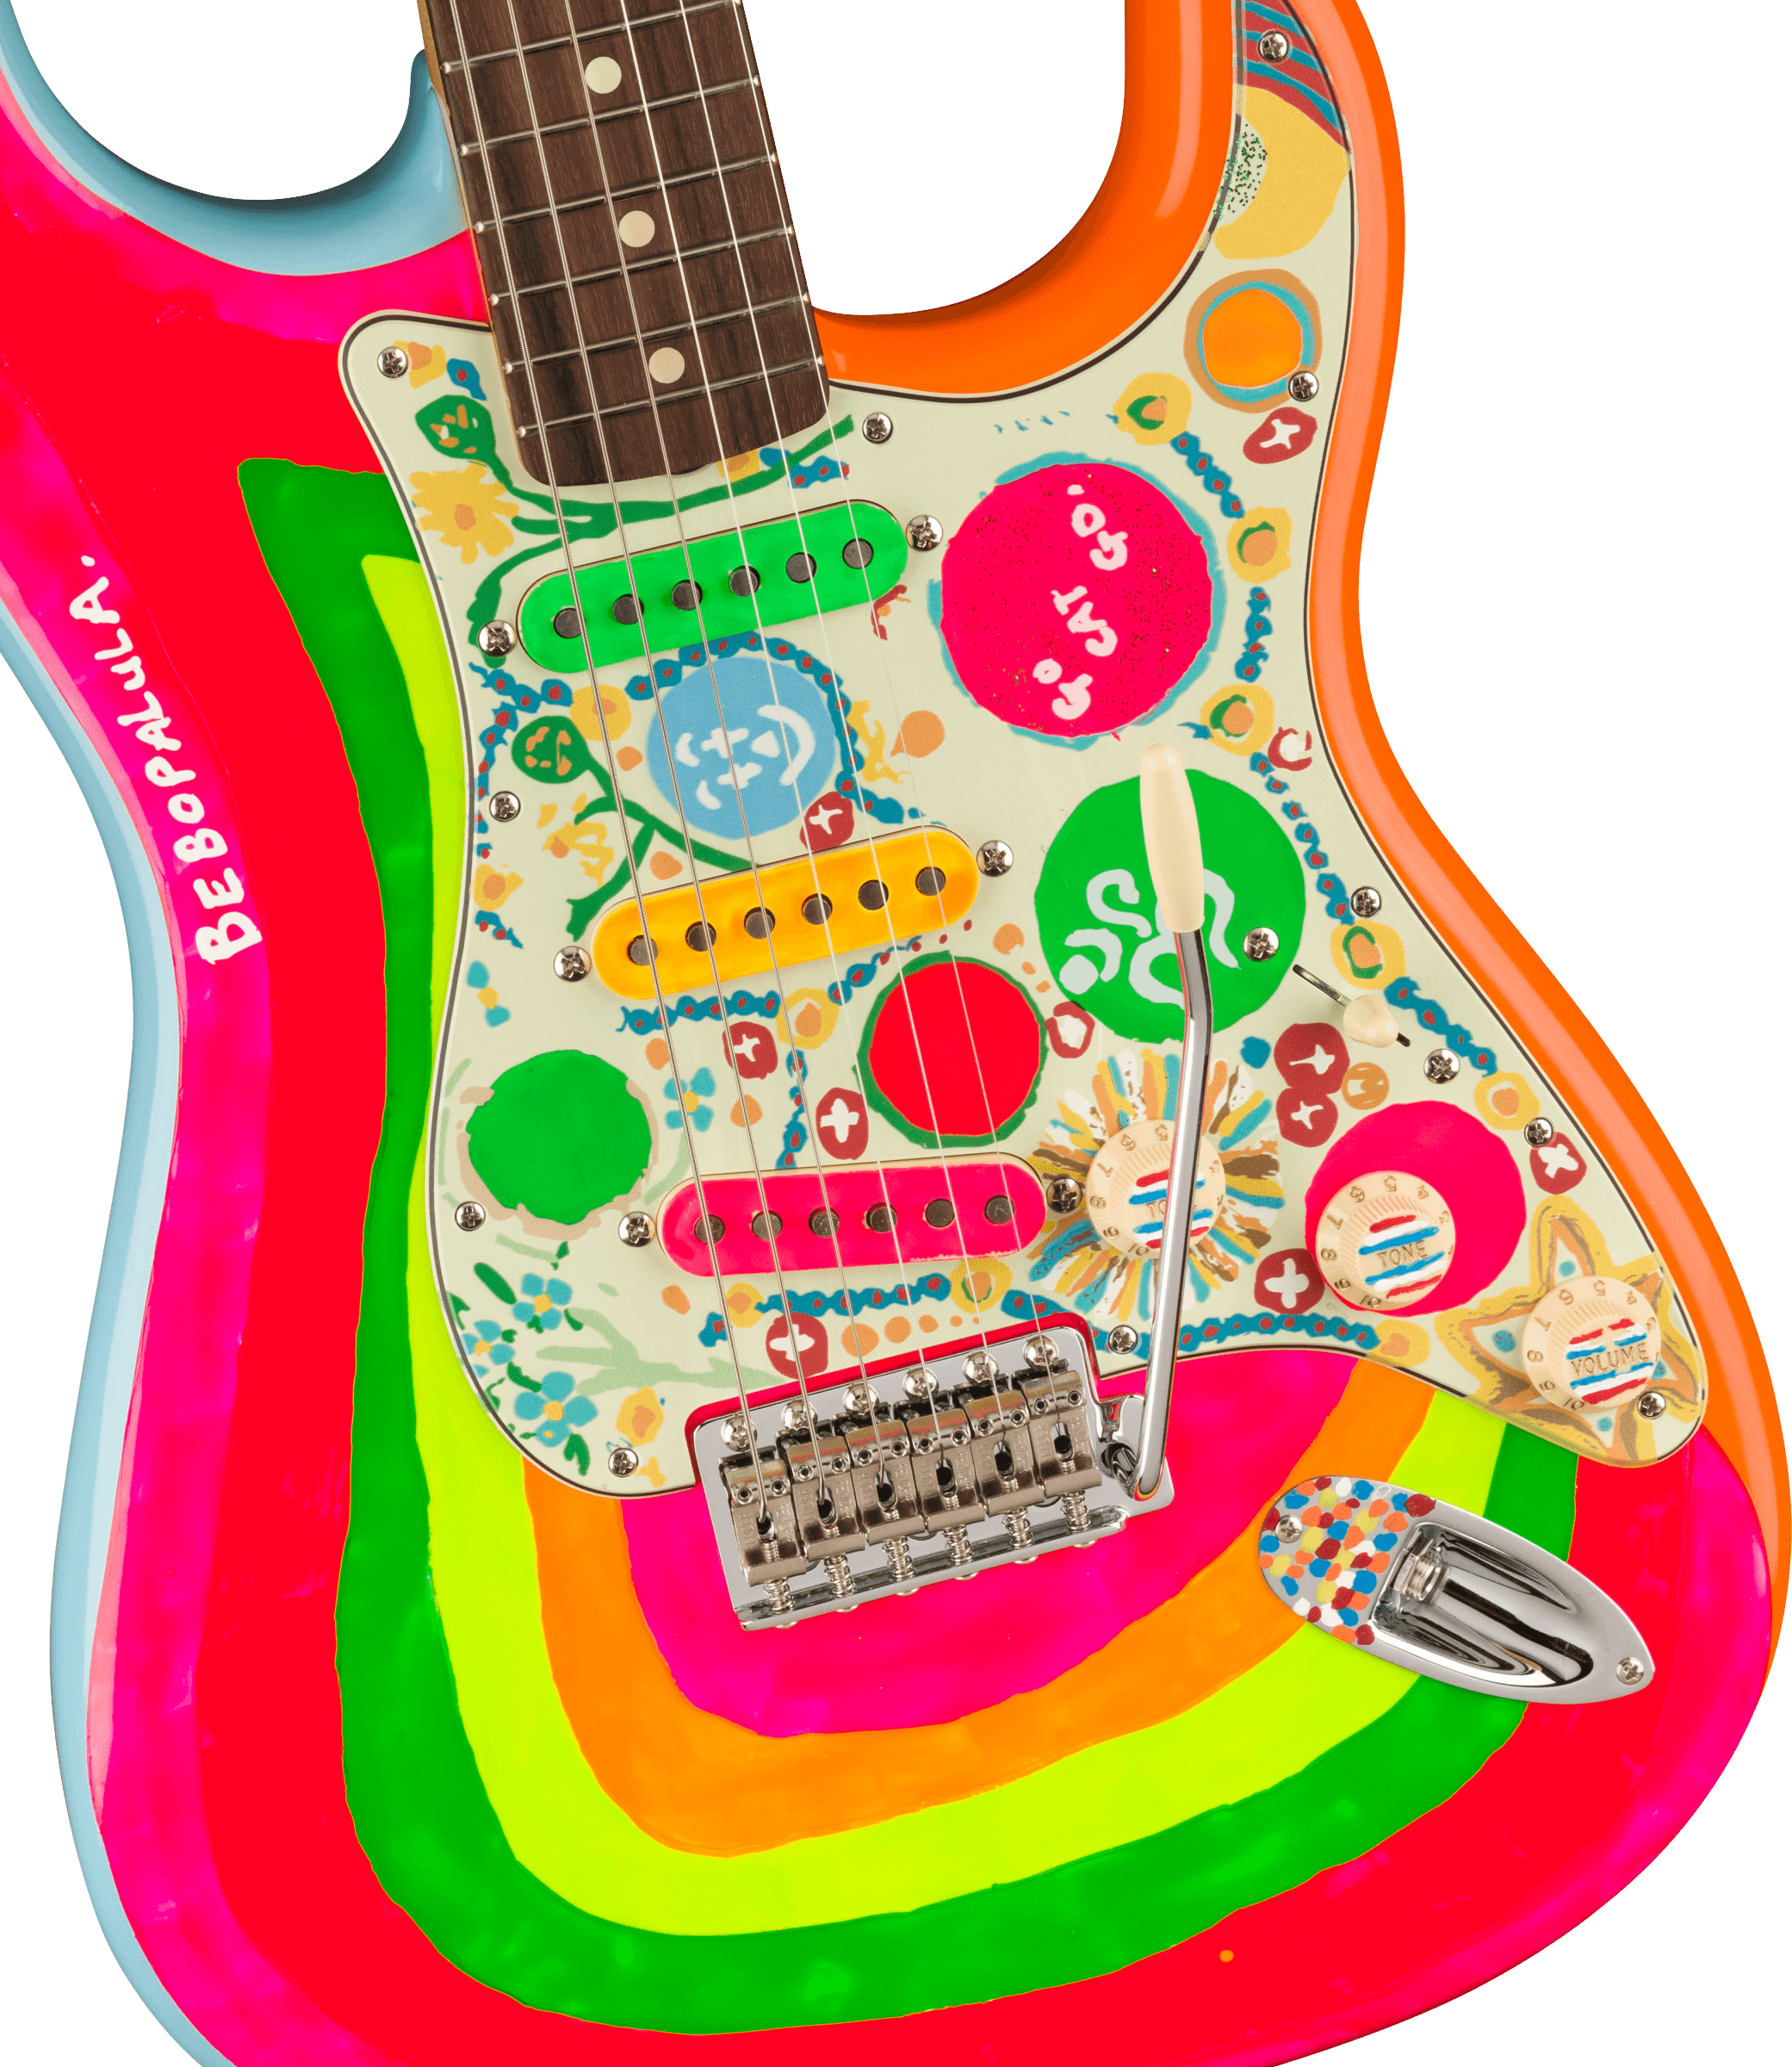 Fender Stratocaster Mex George Harrison Rocky Trem 3s Rw - Hand Painted Rocky Artwork Over Sonic Blue - Str shape electric guitar - Variation 2